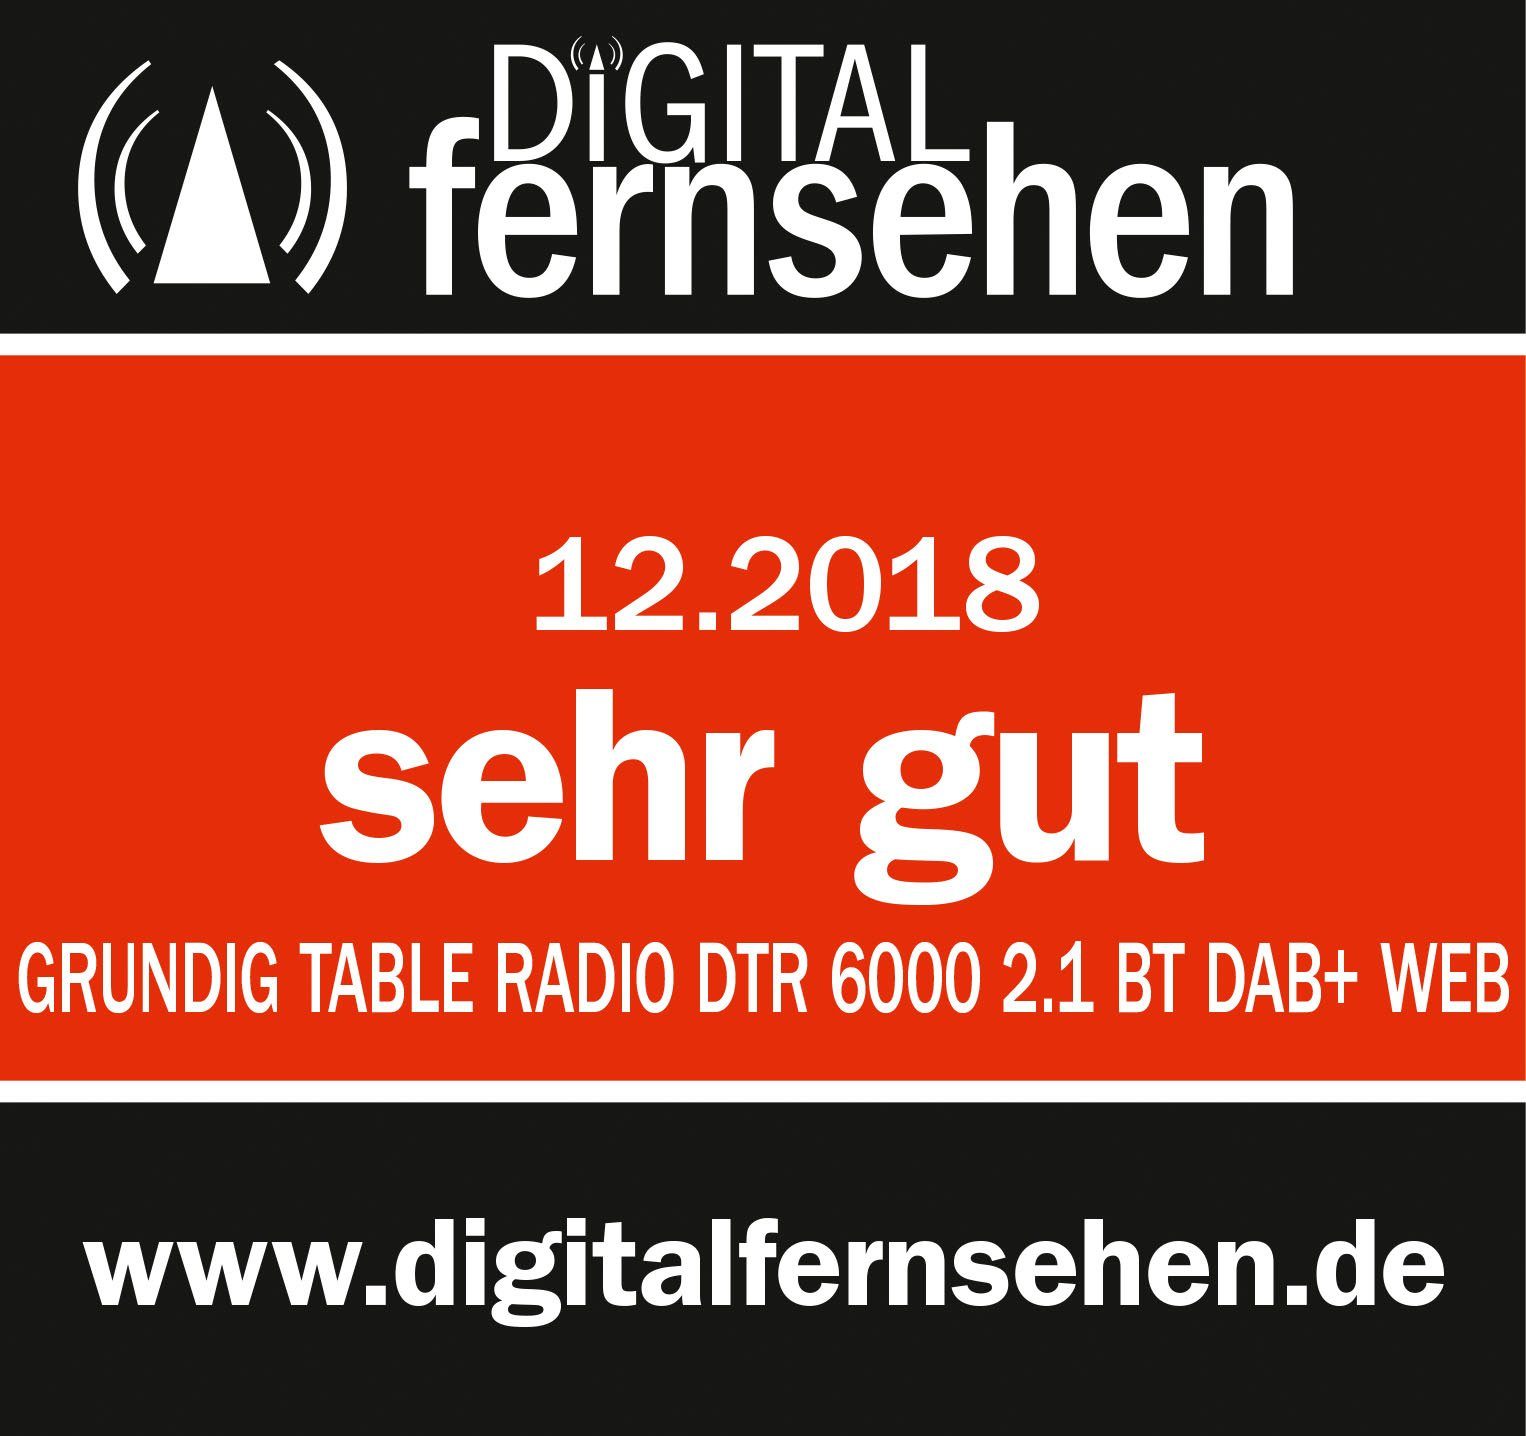 FM-Tuner schwarz (DAB), X W) (Digitalradio mit (DAB) 28 Grundig DTR RDS, Digitalradio Internetradio, 6000